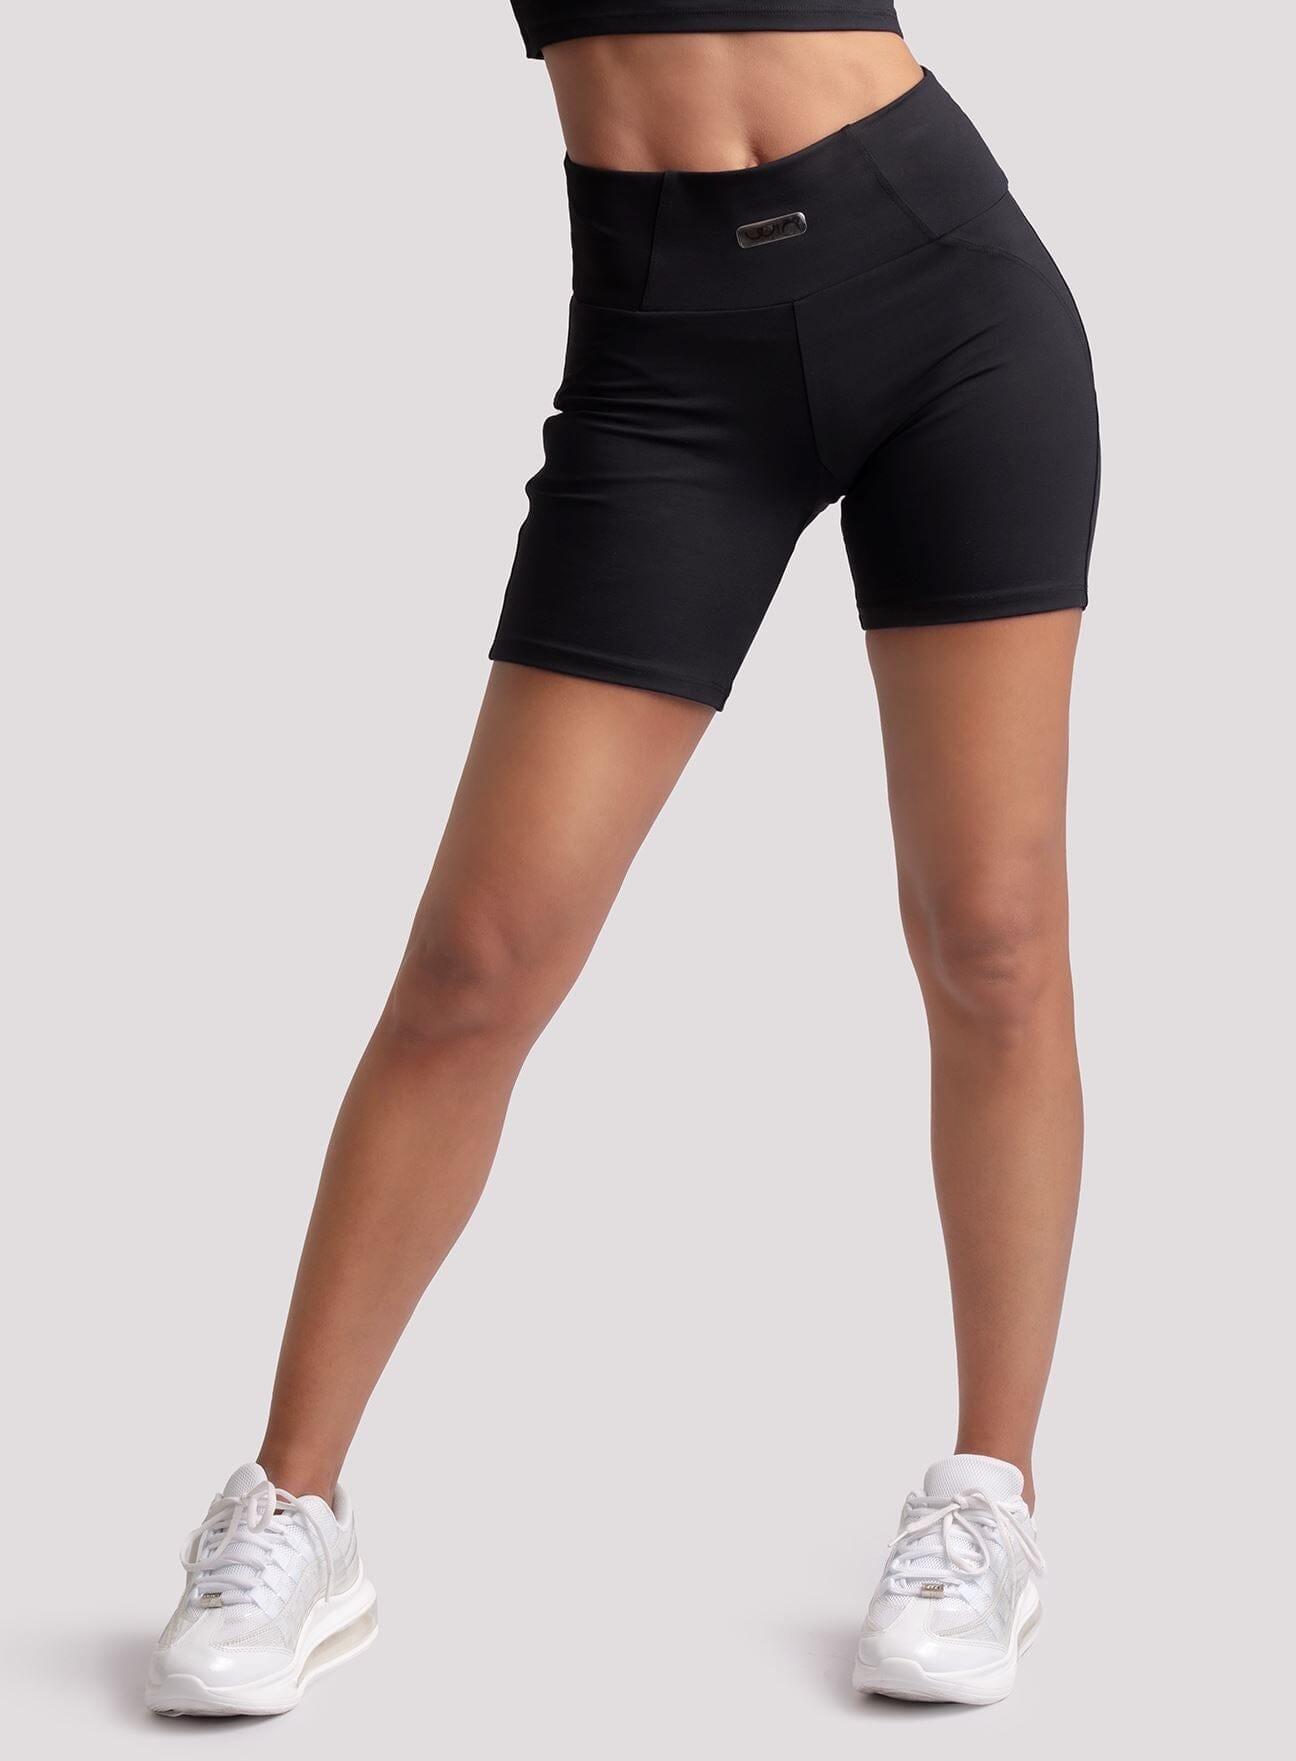 Short Emana Perfect Fit Shorts WinFitnesswear Standard Black#black